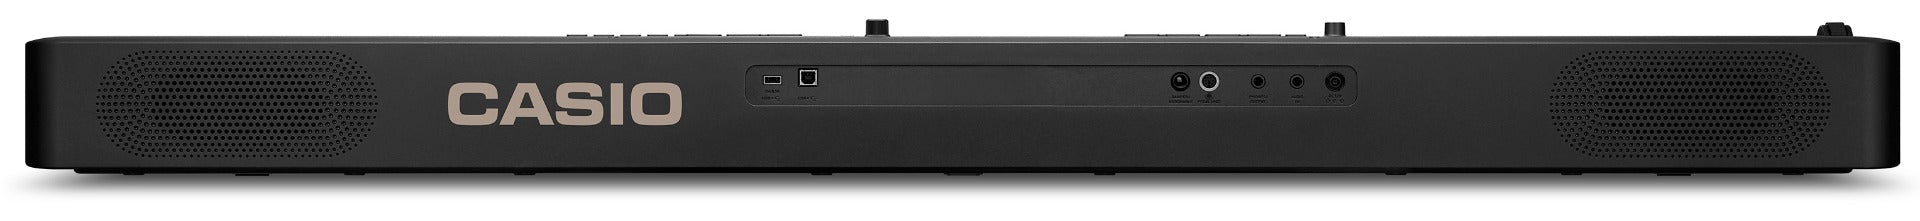 Casio CDP-S360 Compact Digital Piano - Black view 4